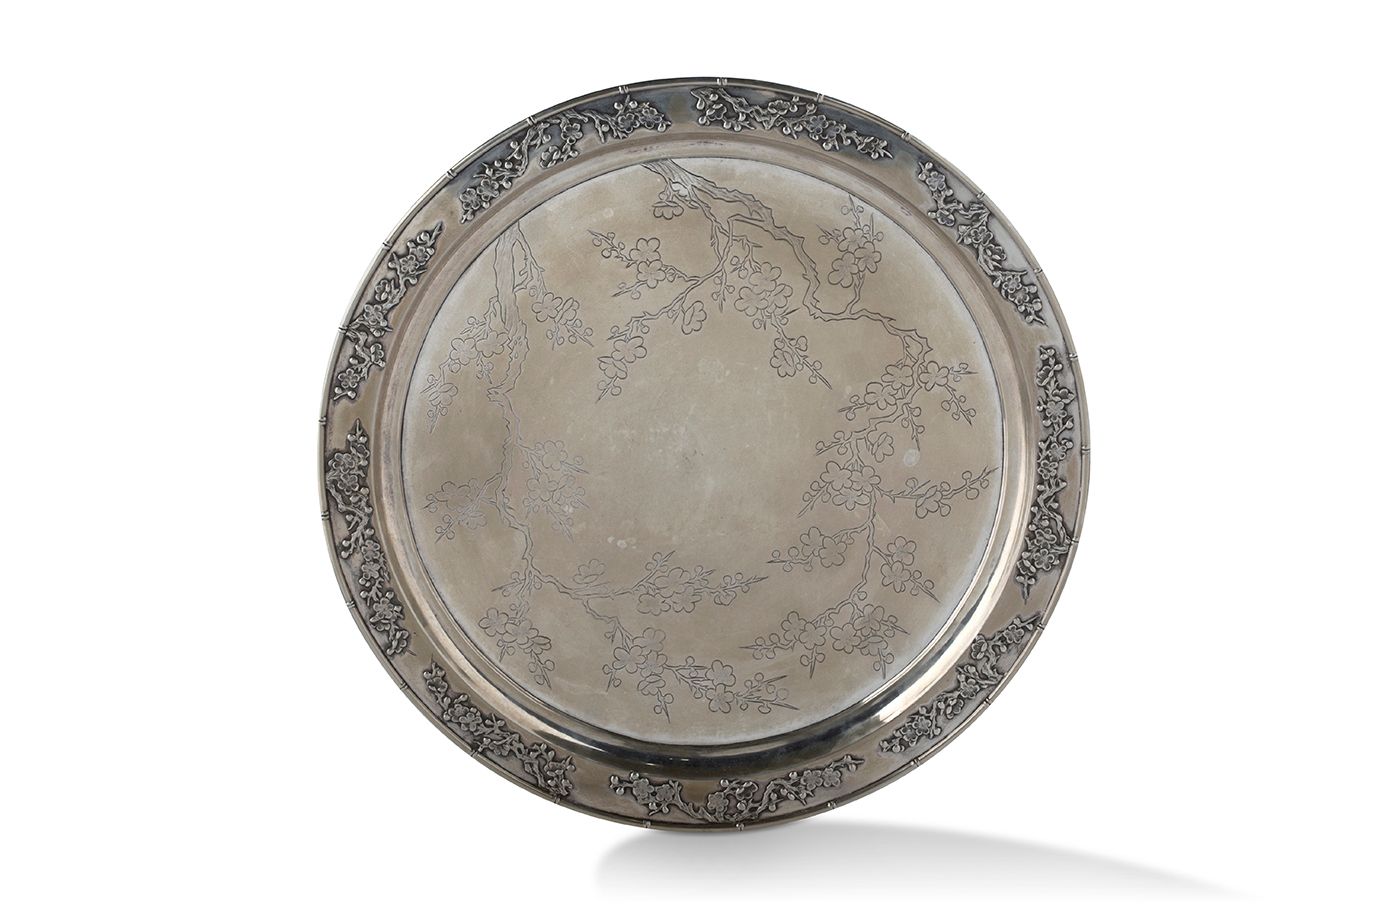 CHINE, LUEN-WO DÉBUT DU XXe SIÈCLE Circular tray
Silver, engraved with prunus bl&hellip;